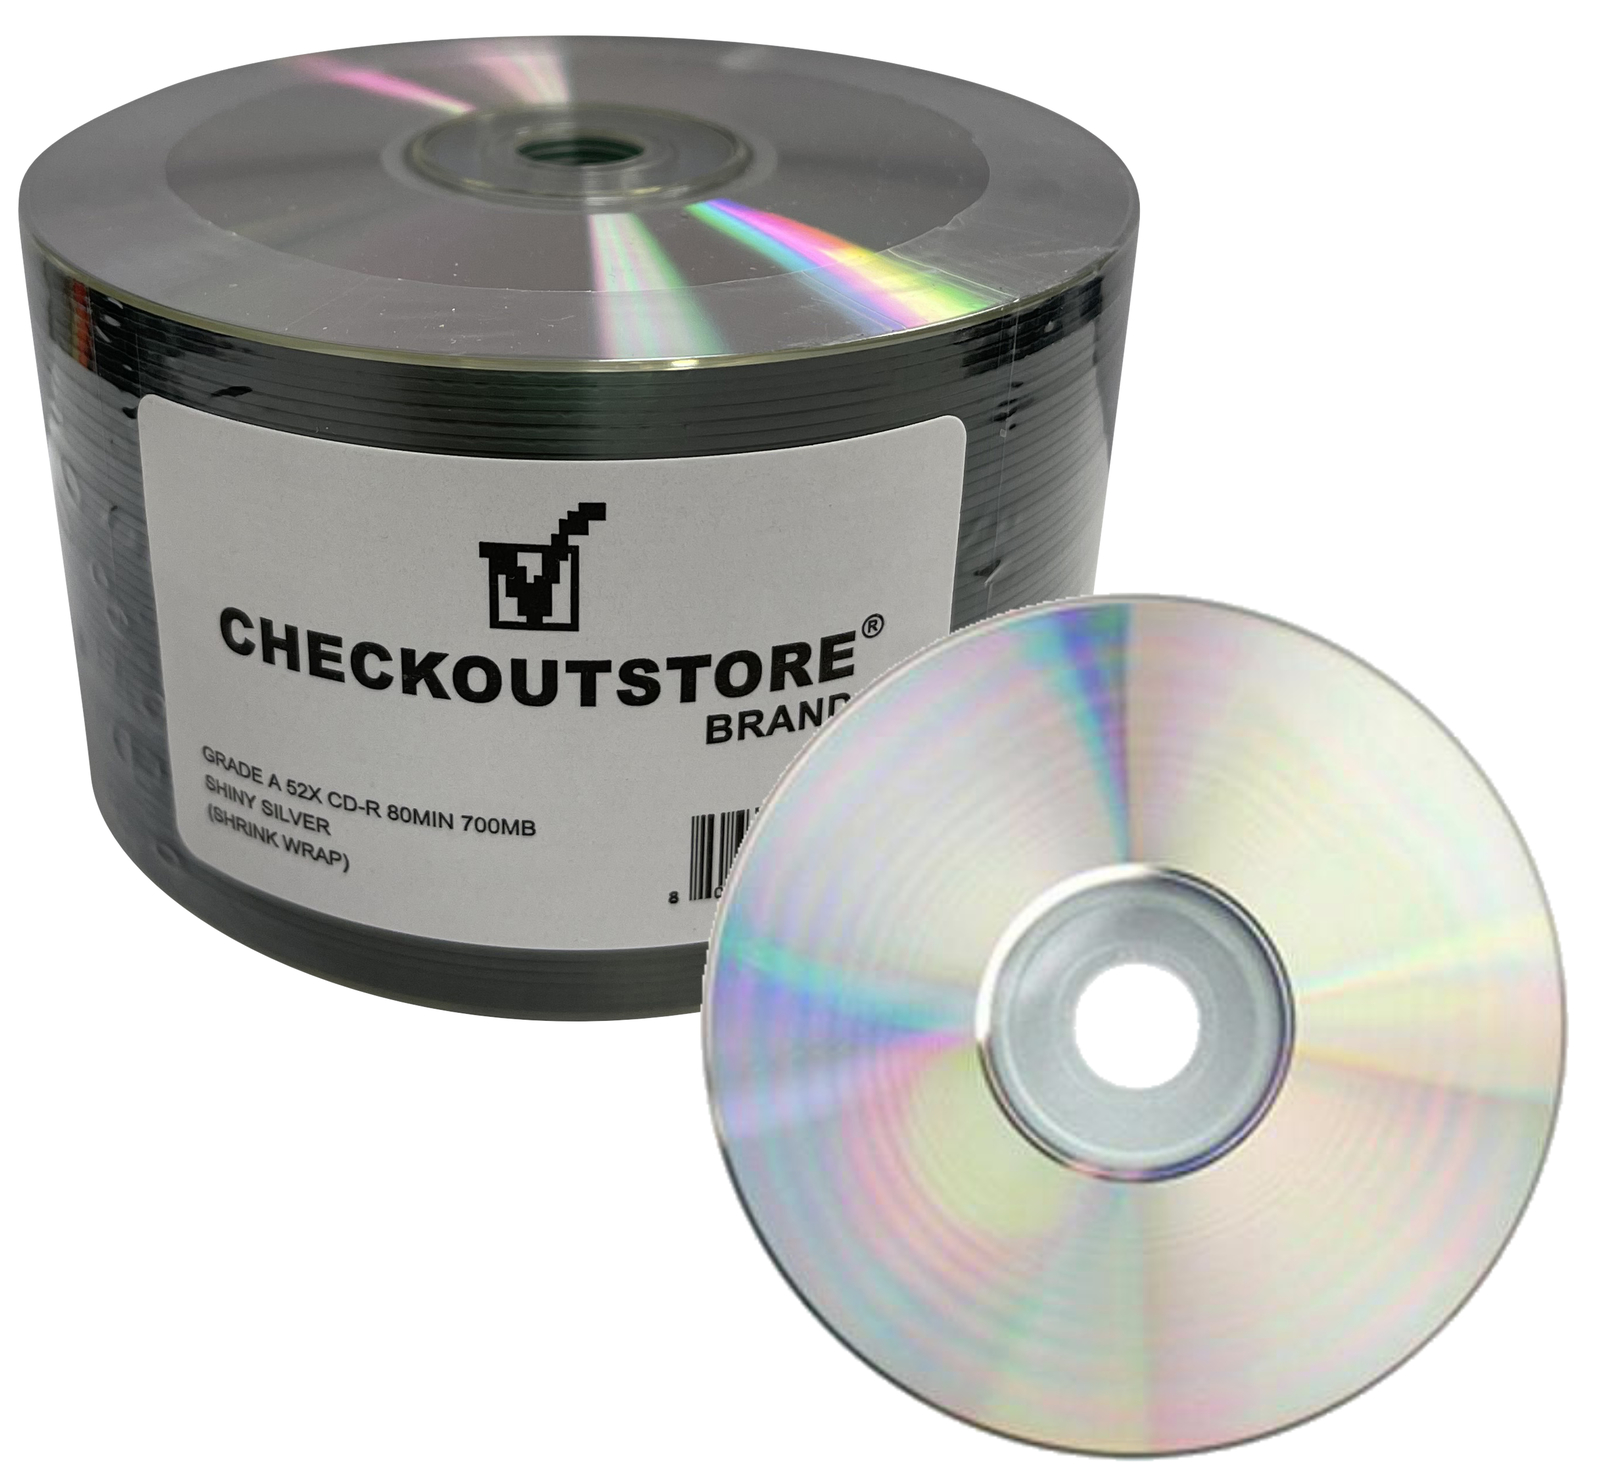 Grade A 52x CD-R 80min 700MB Shiny Silver (Shrink Wrap) - $18.82 - $973.44